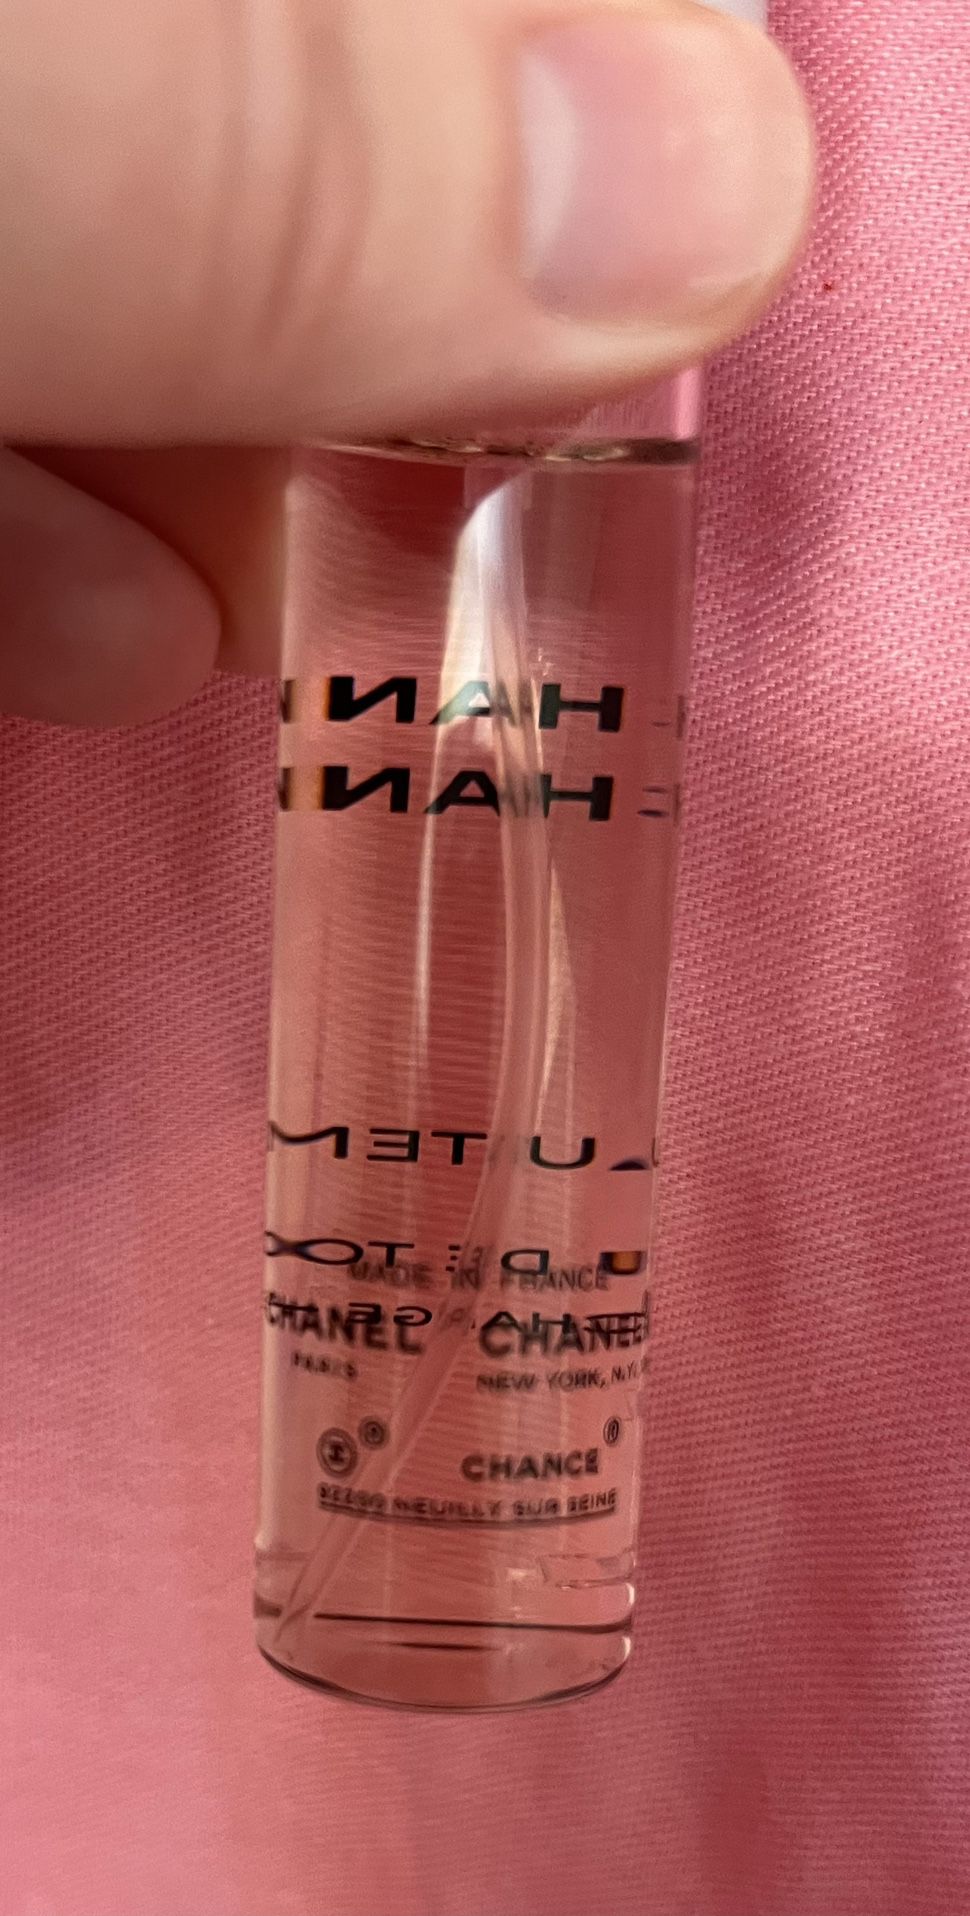 Chanel Chance Eau Tendre for Sale in Las Vegas, NV - OfferUp